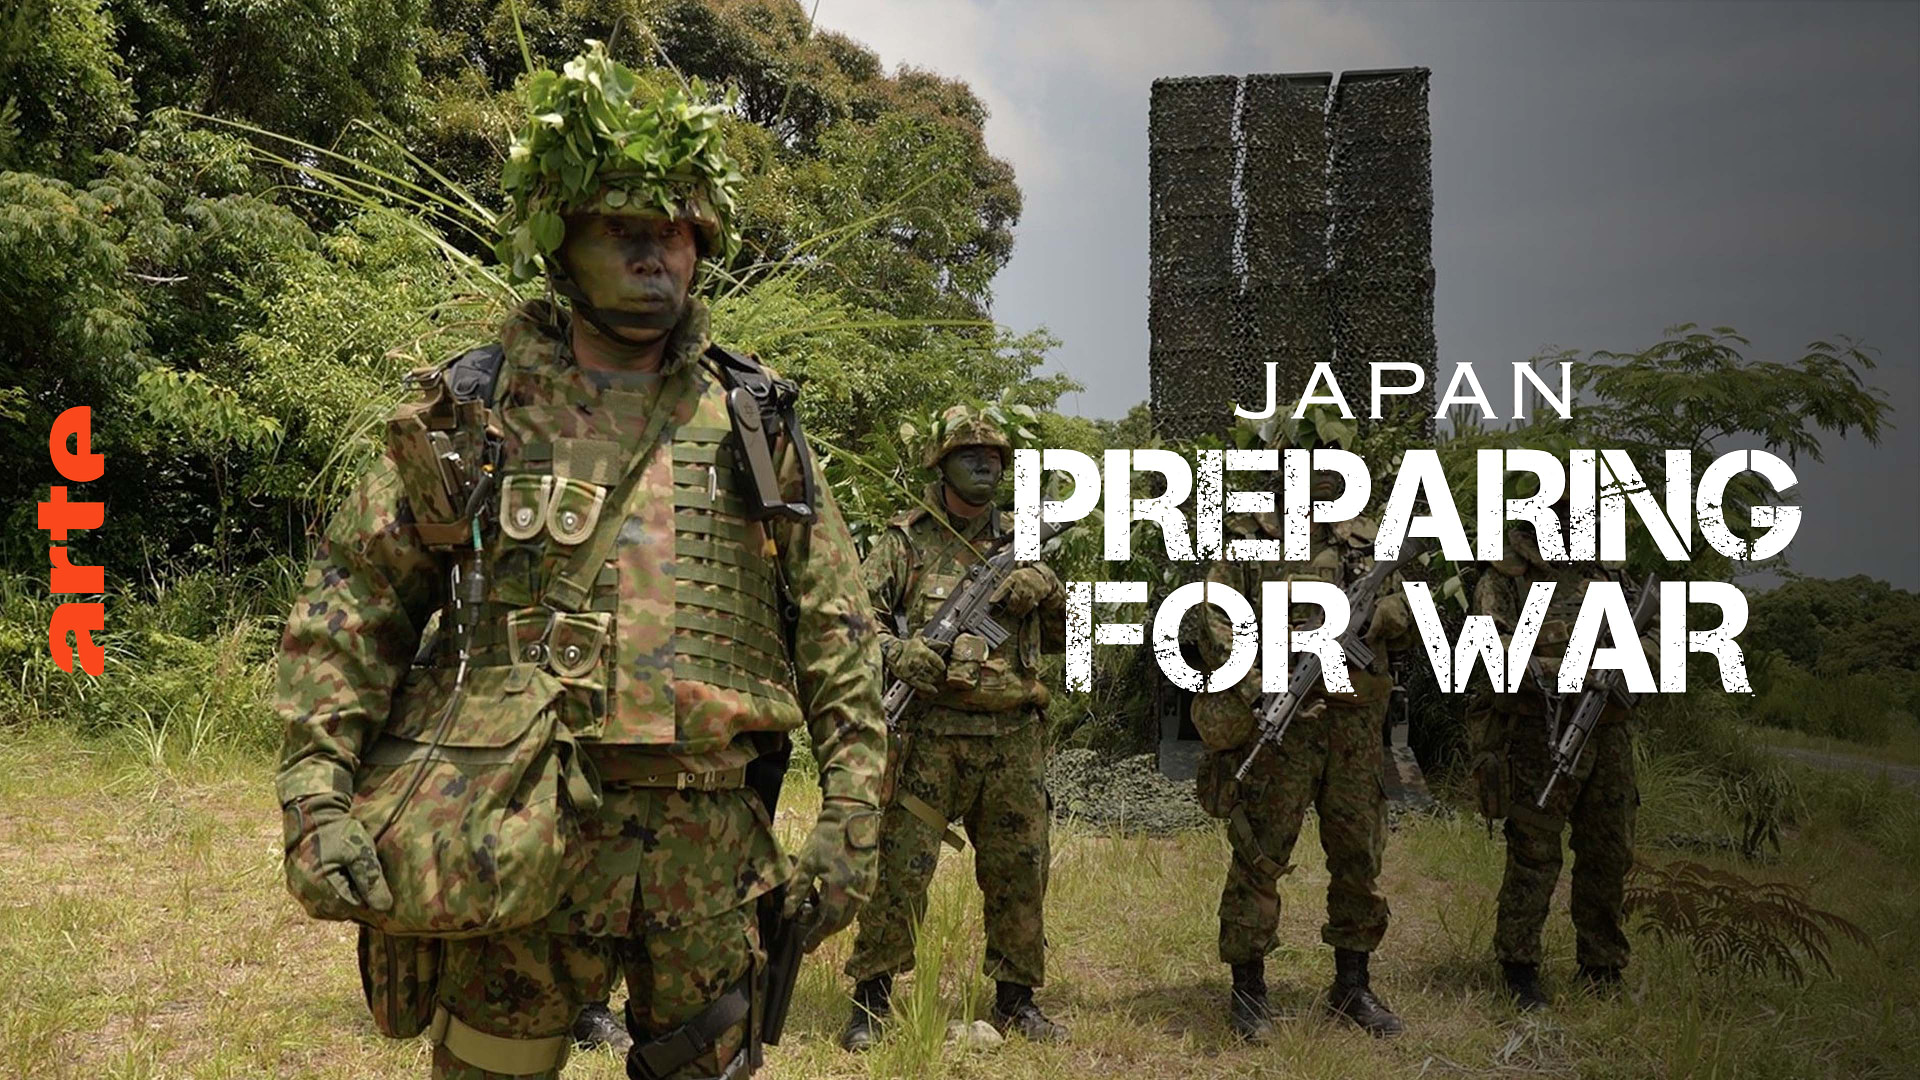 Japanse Rape Sex - ARTE Reportage - Japan: Preparing for War - Watch the full documentary |  ARTE in English